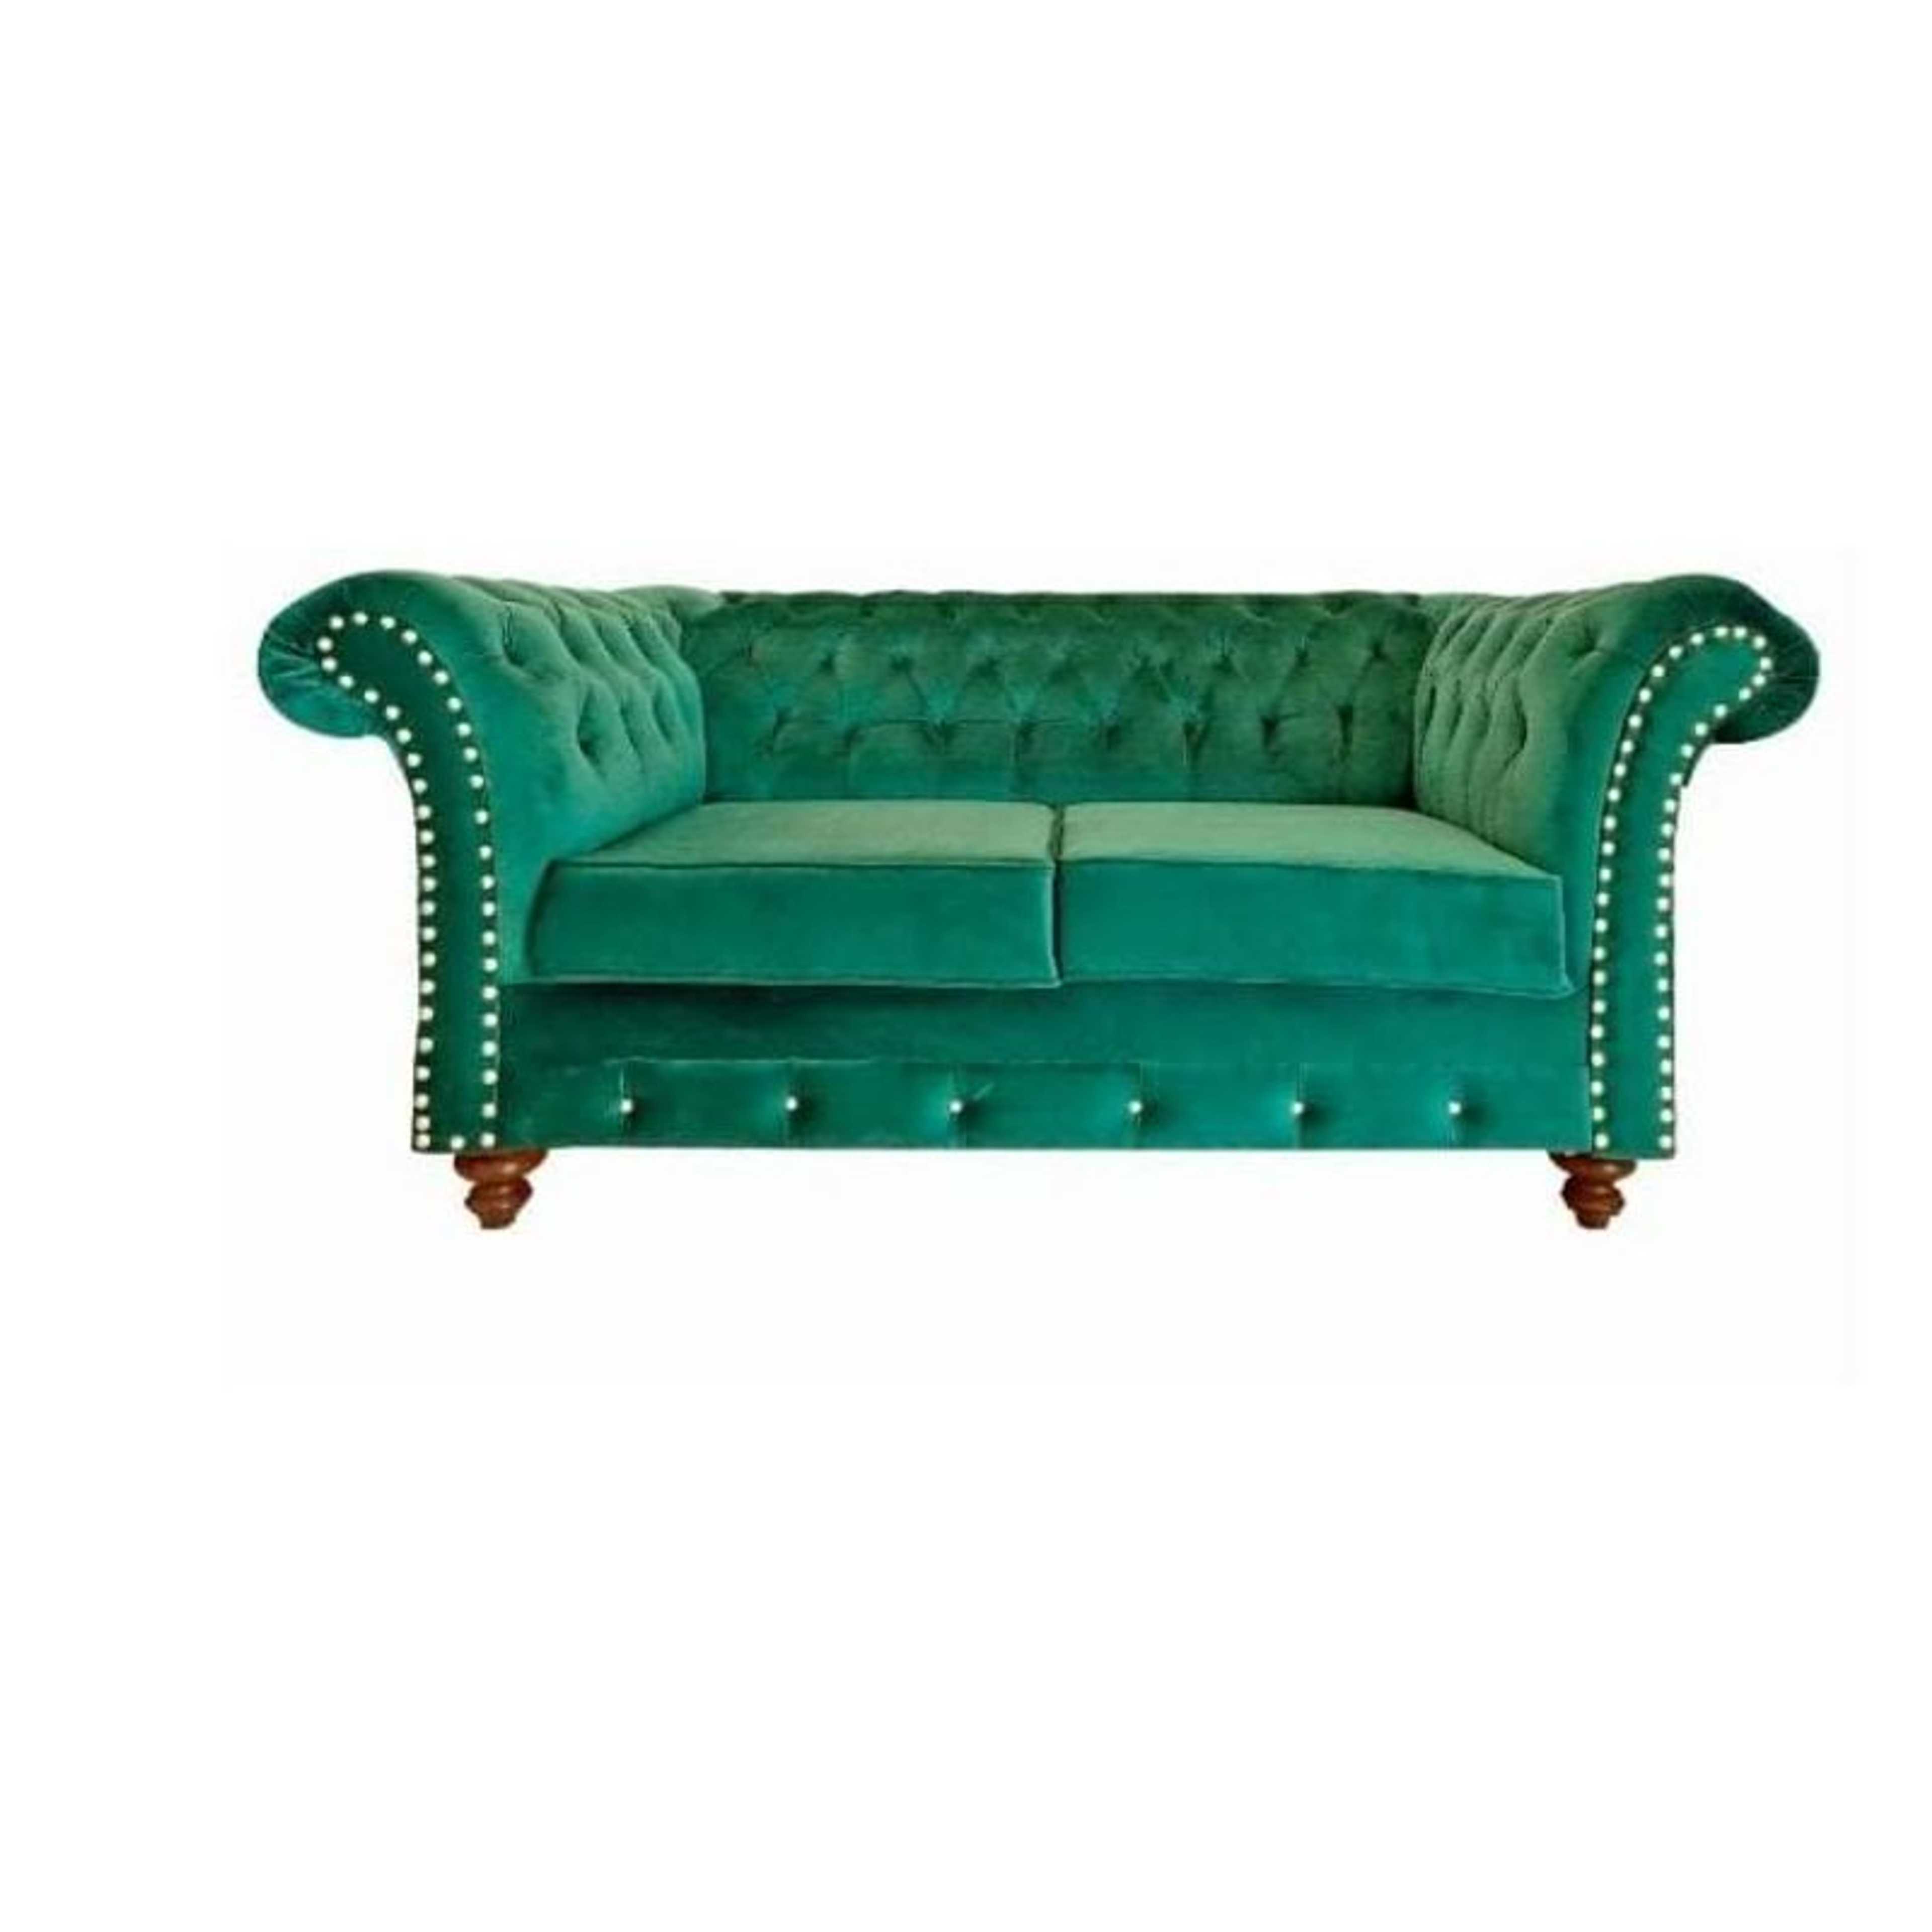  Master Green Sofa Set